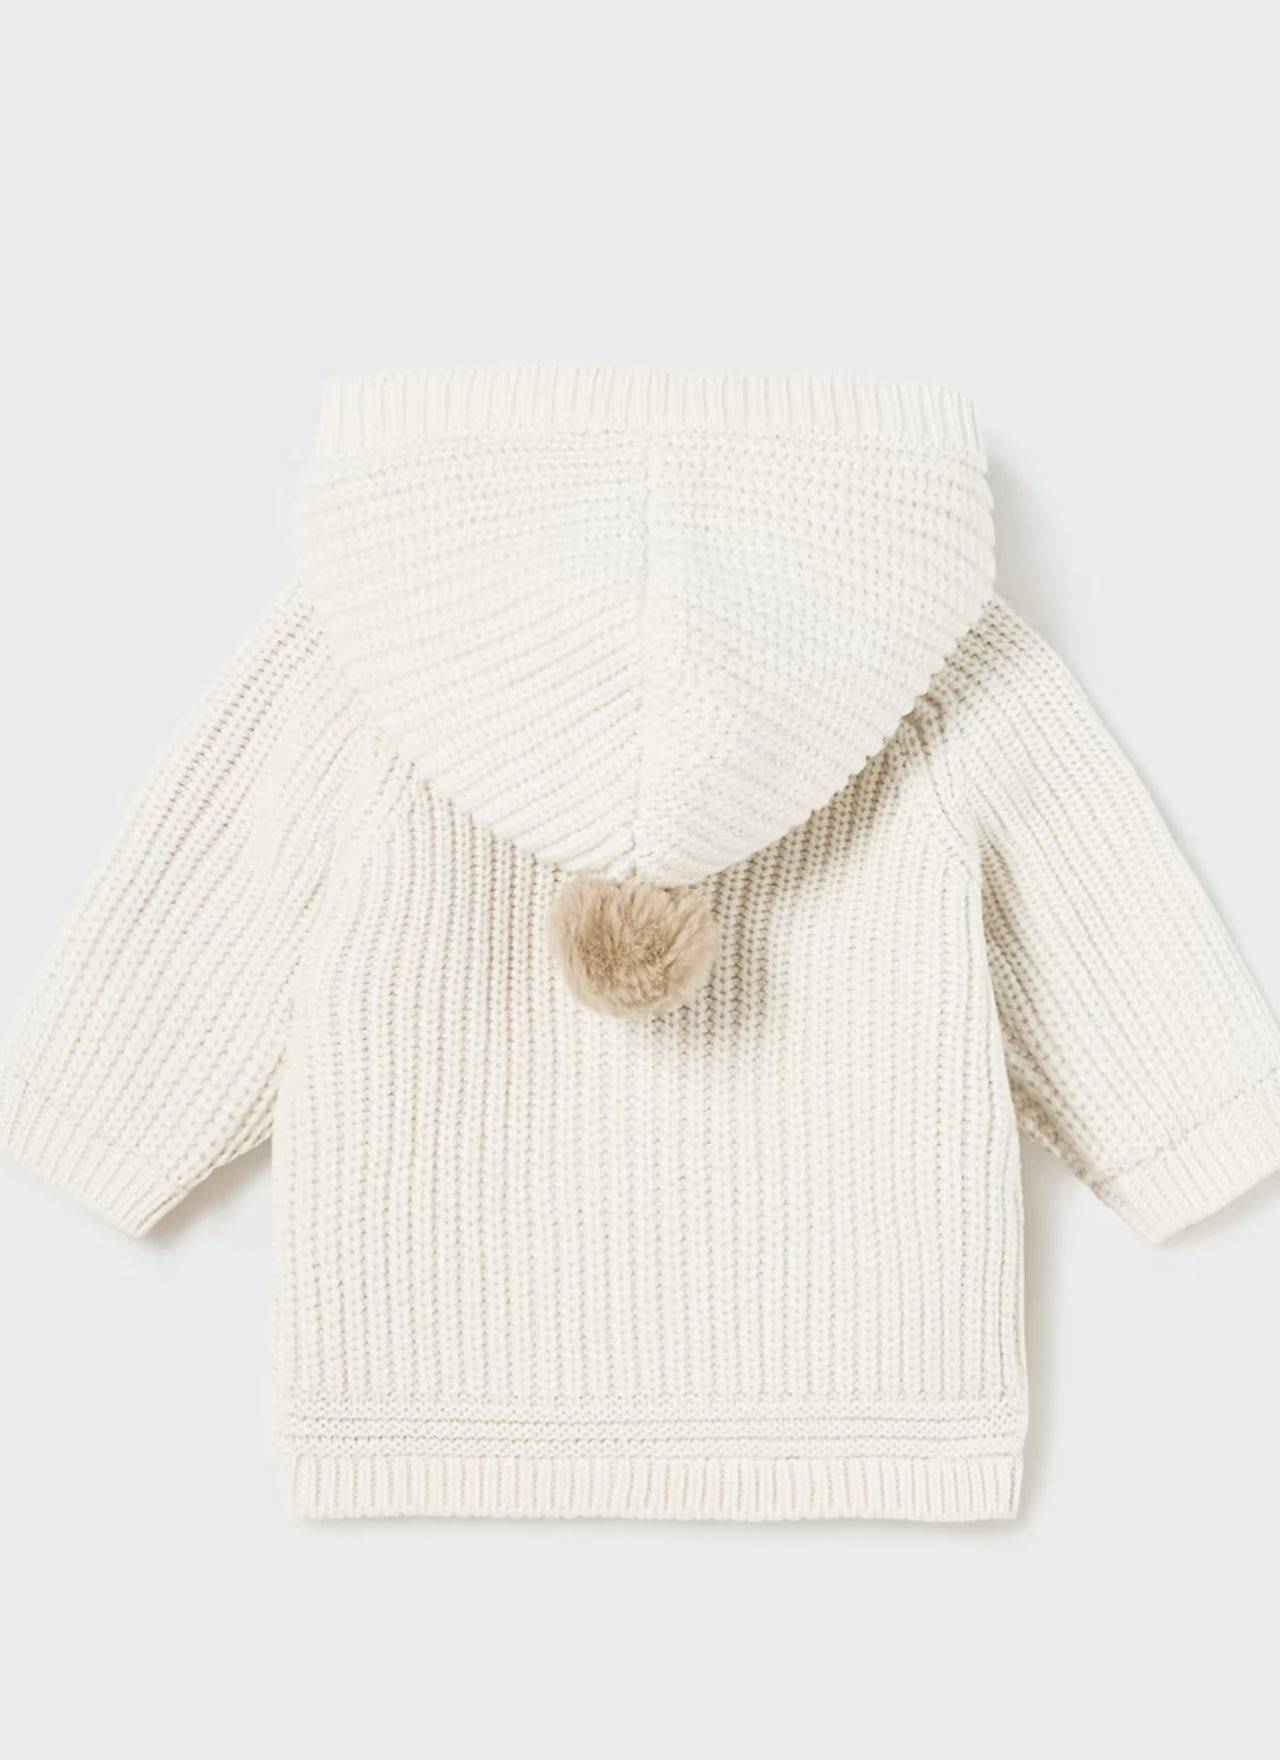 Newborn baby boy knit sweater